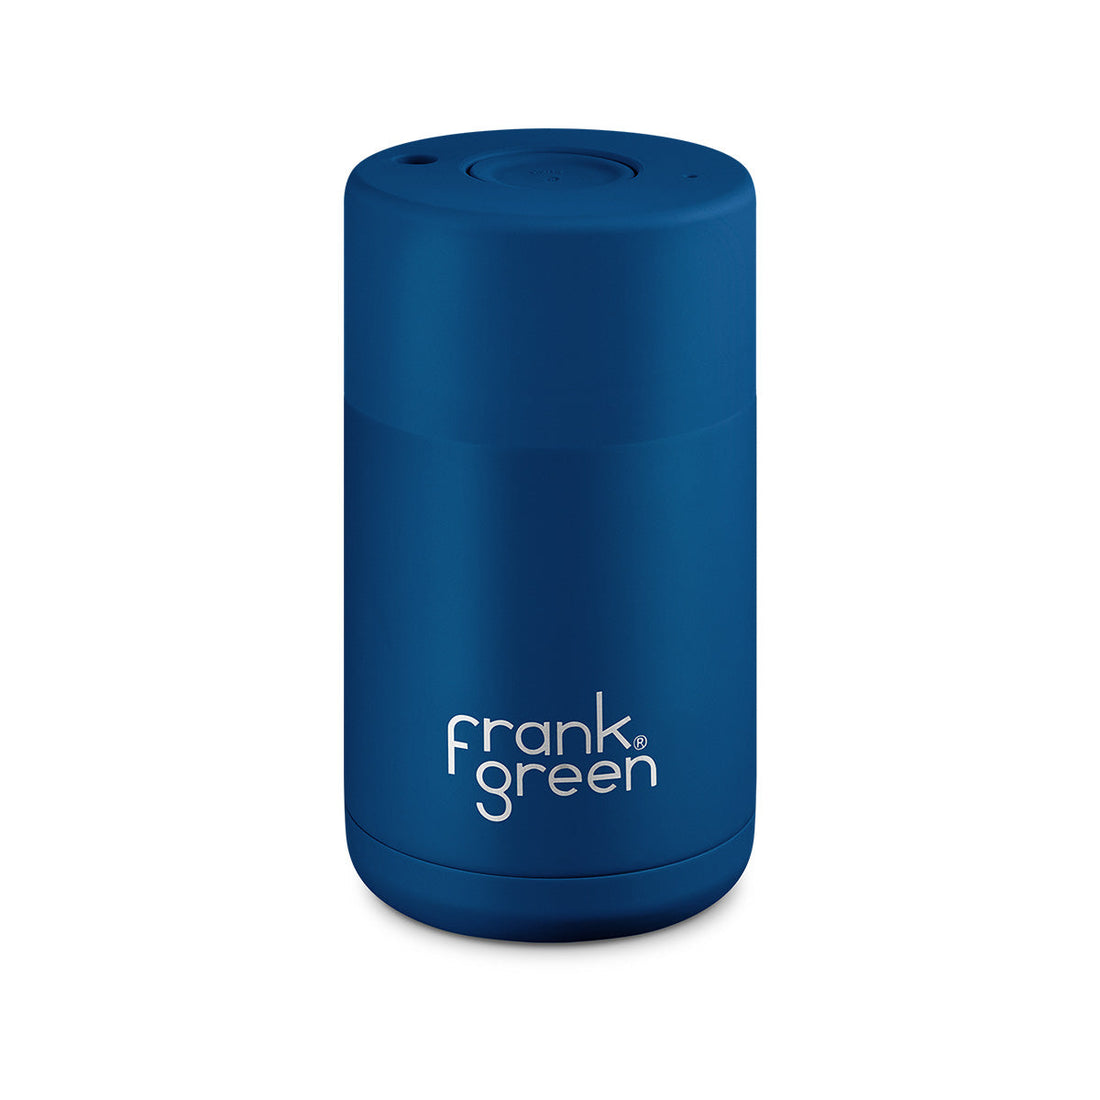 Frank Green The Essentials Ceramic Cup Gift Set Small - Deep Ocean